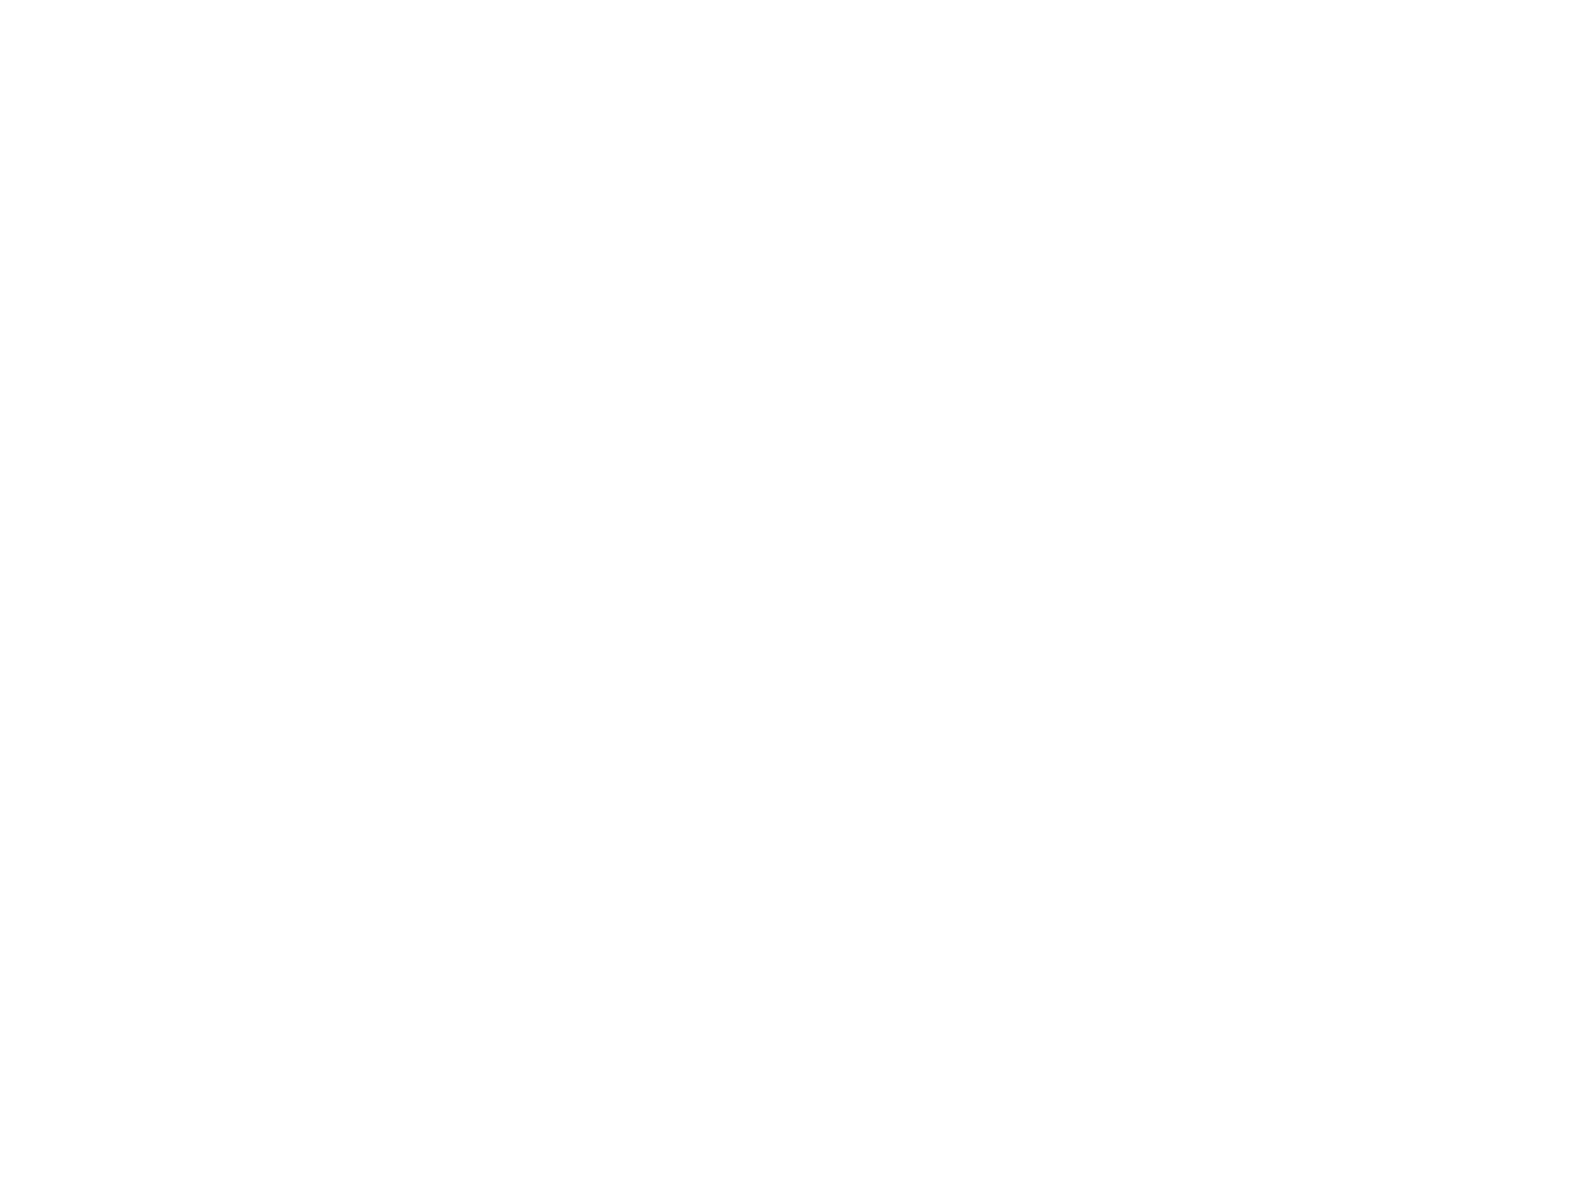 Lifecore Biomedical logo for dark backgrounds (transparent PNG)